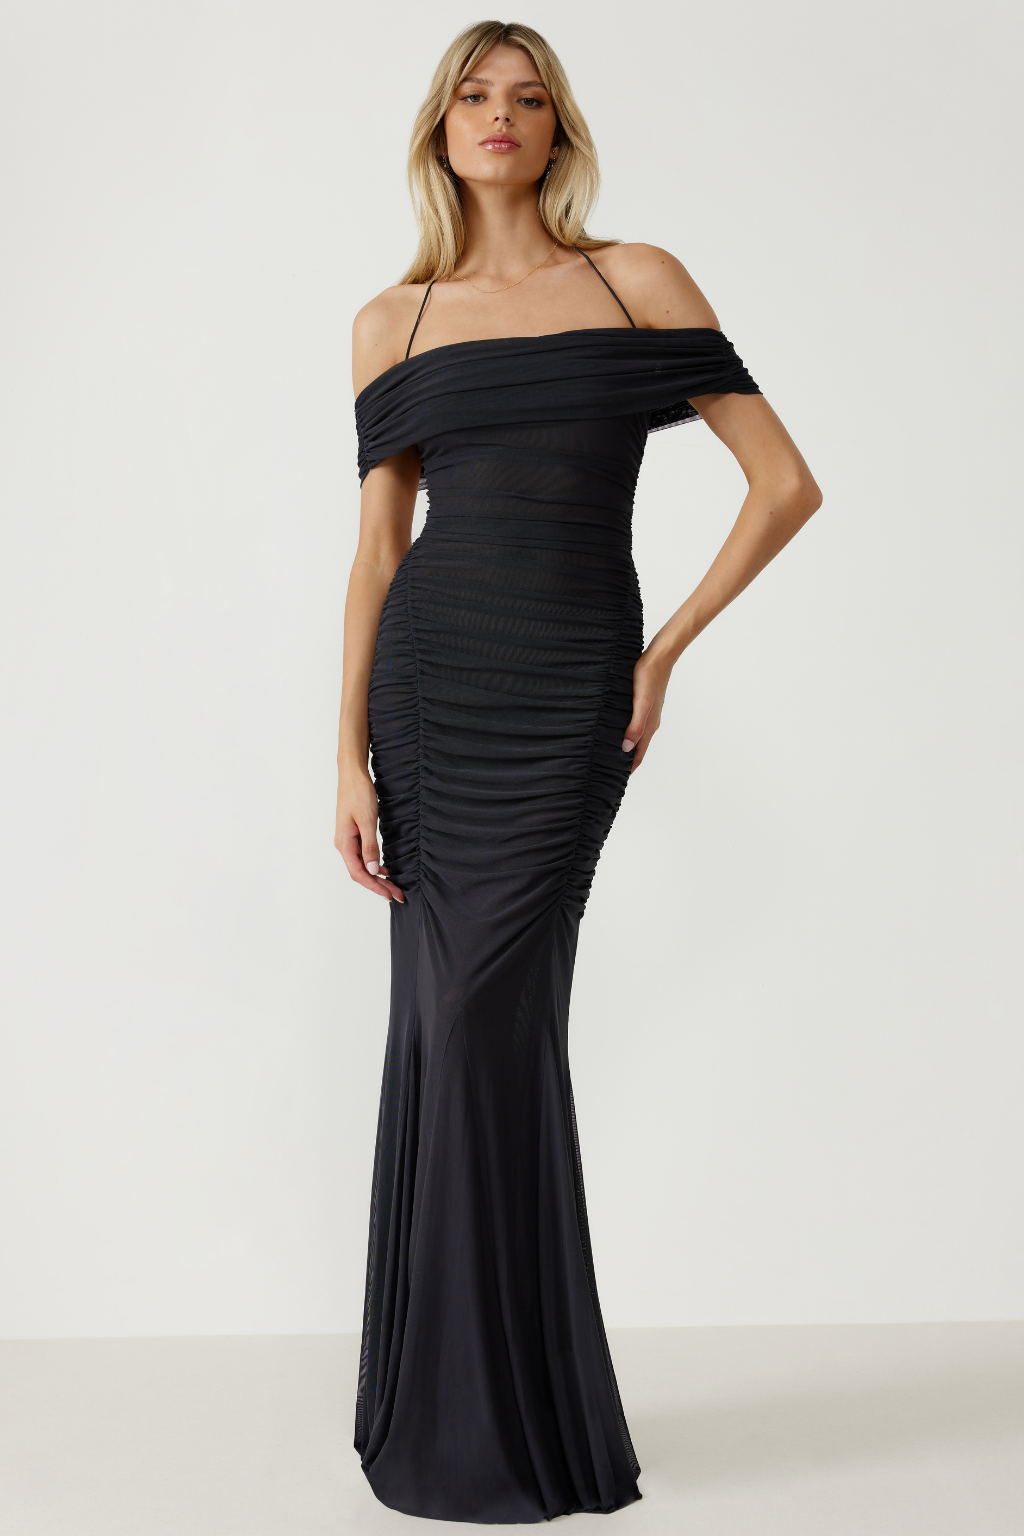 Xena Dress in Black by Lexi - RENTAL